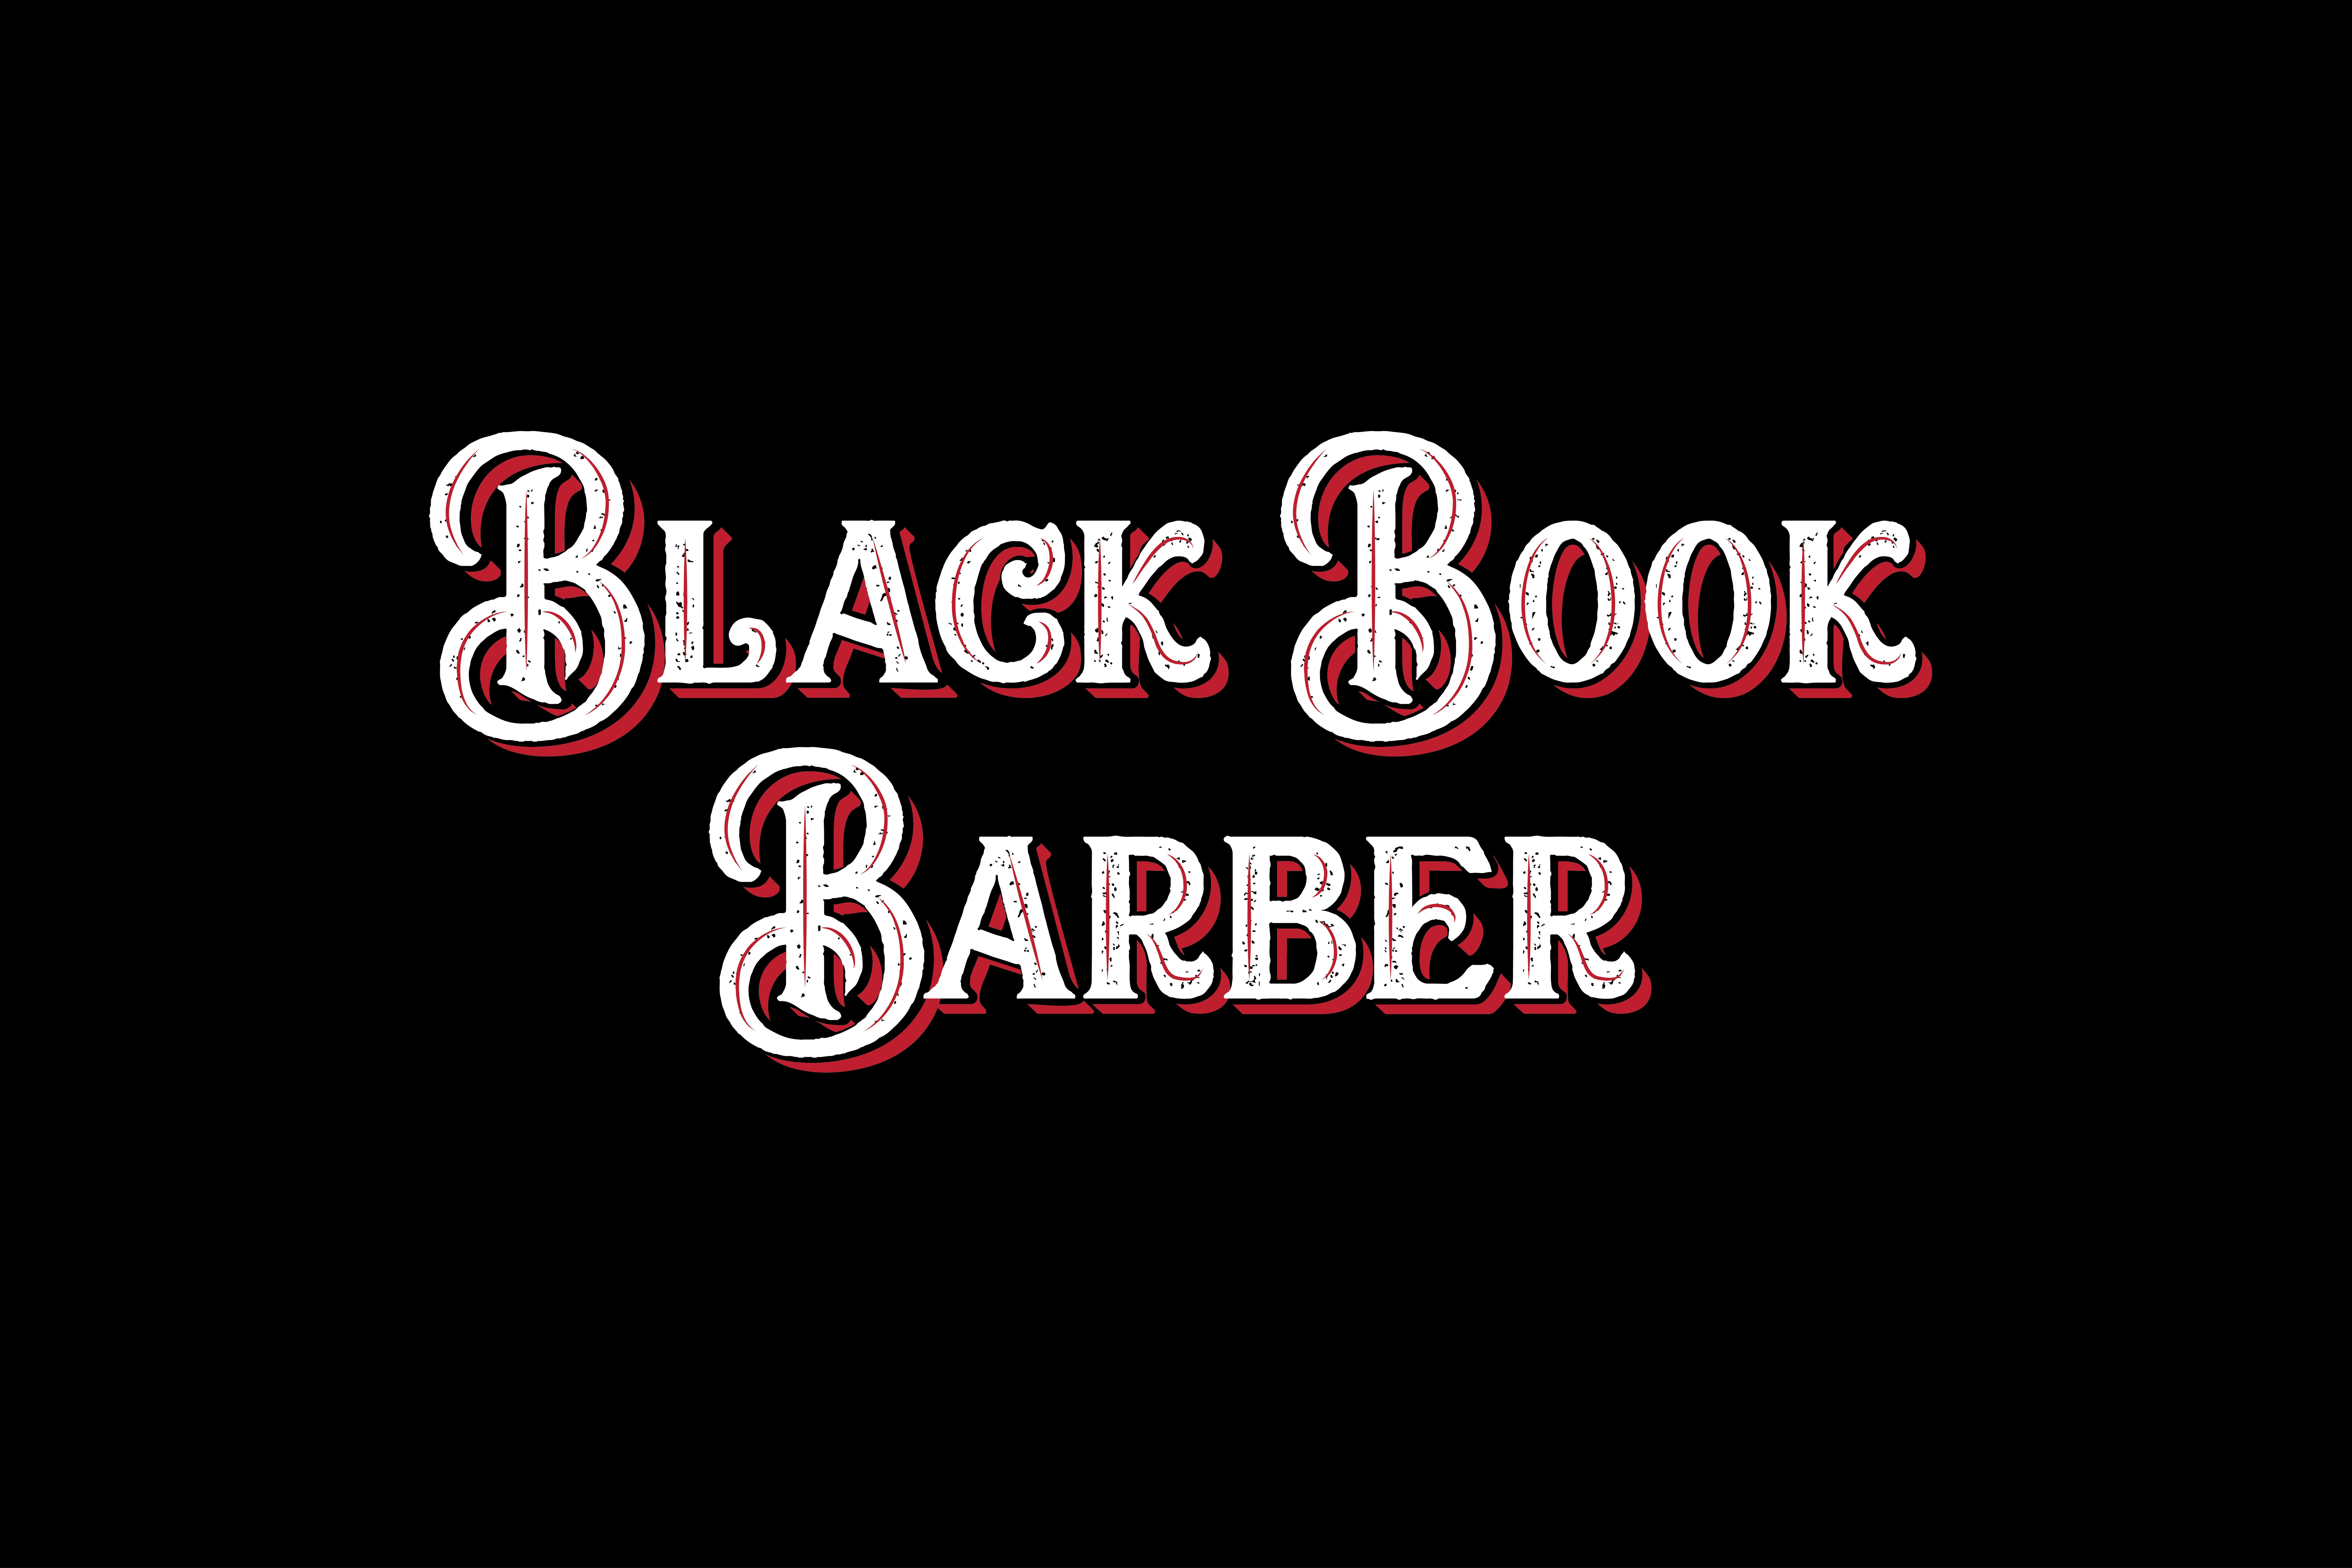 Black Book Barber